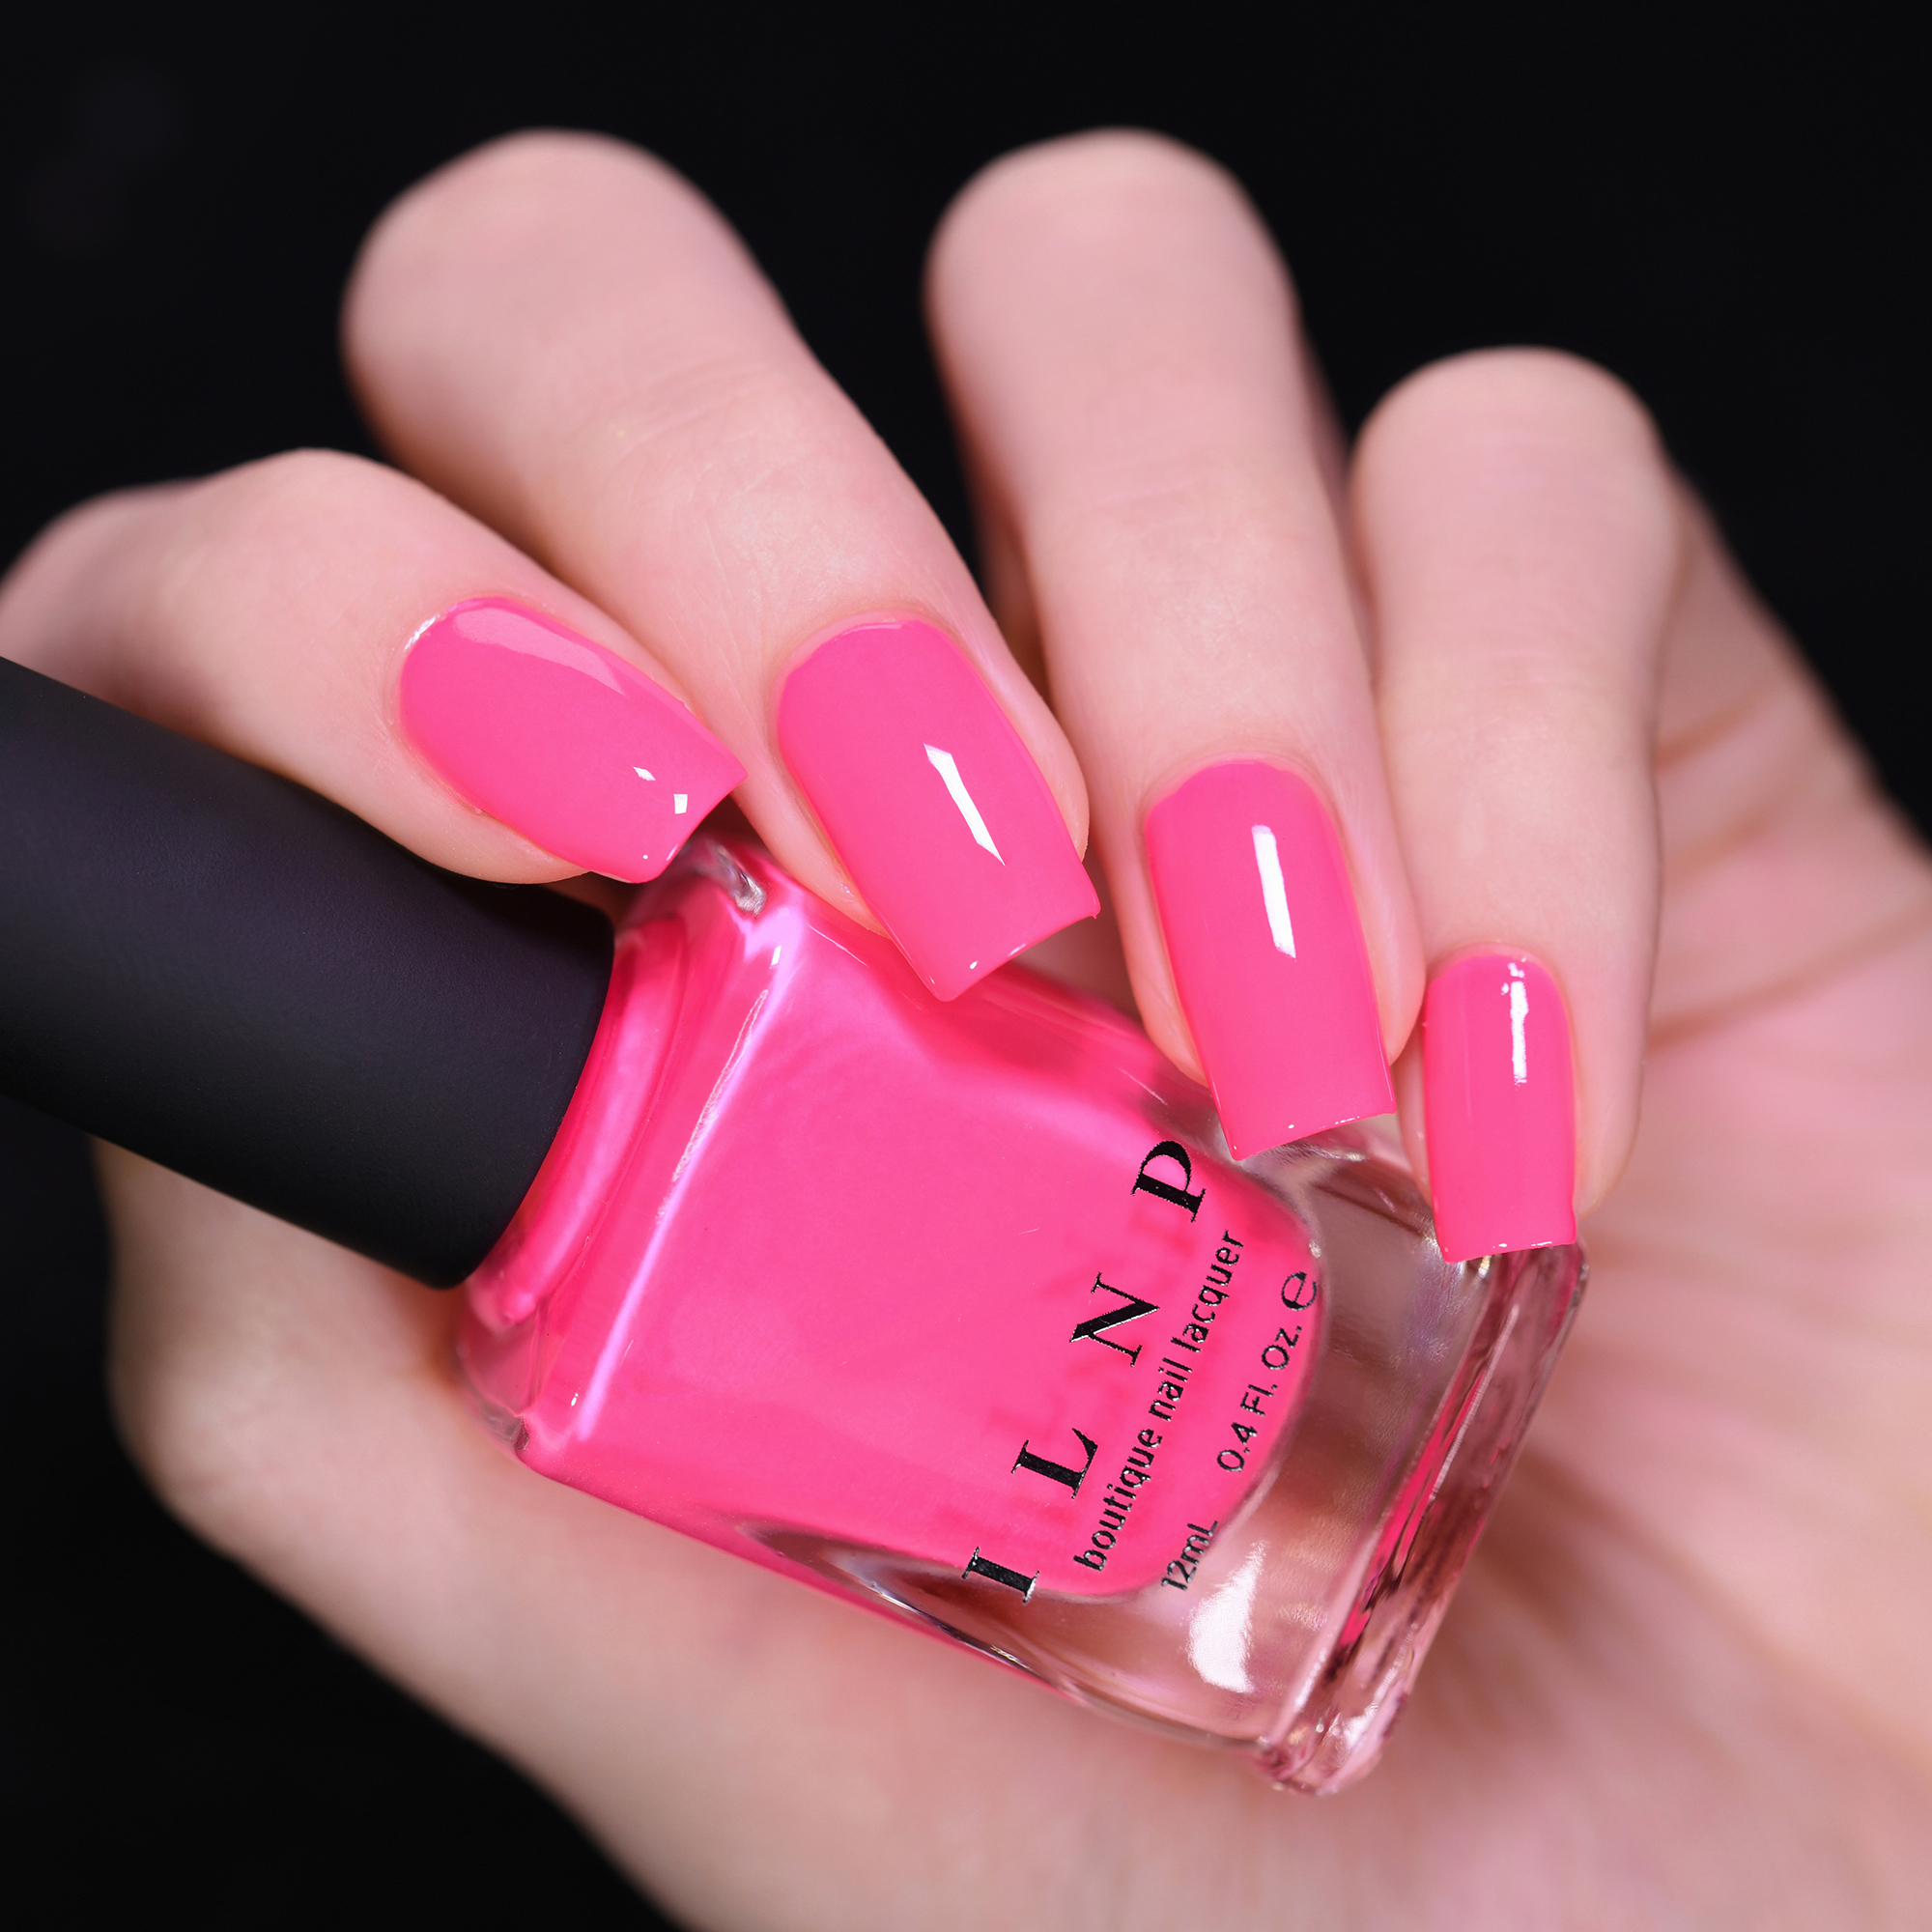 Two Piece - Striking Neon Pink Cream Nail Polish by ILNP